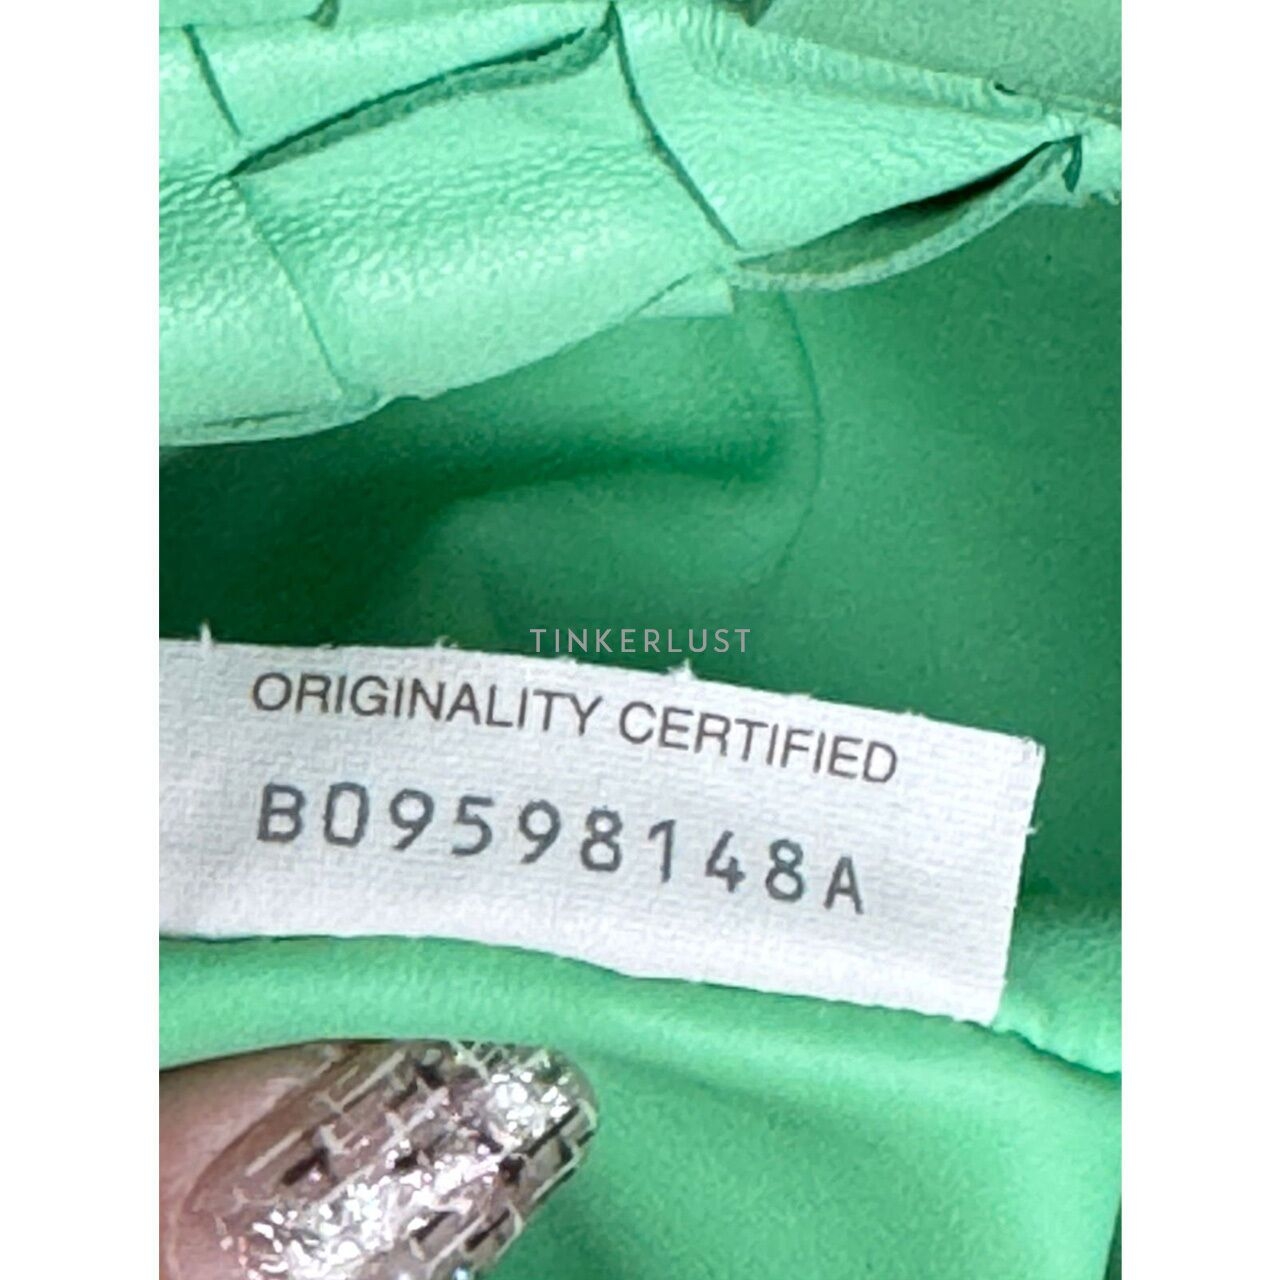 Bottega Veneta Mini Jodie Green Leather Handbag